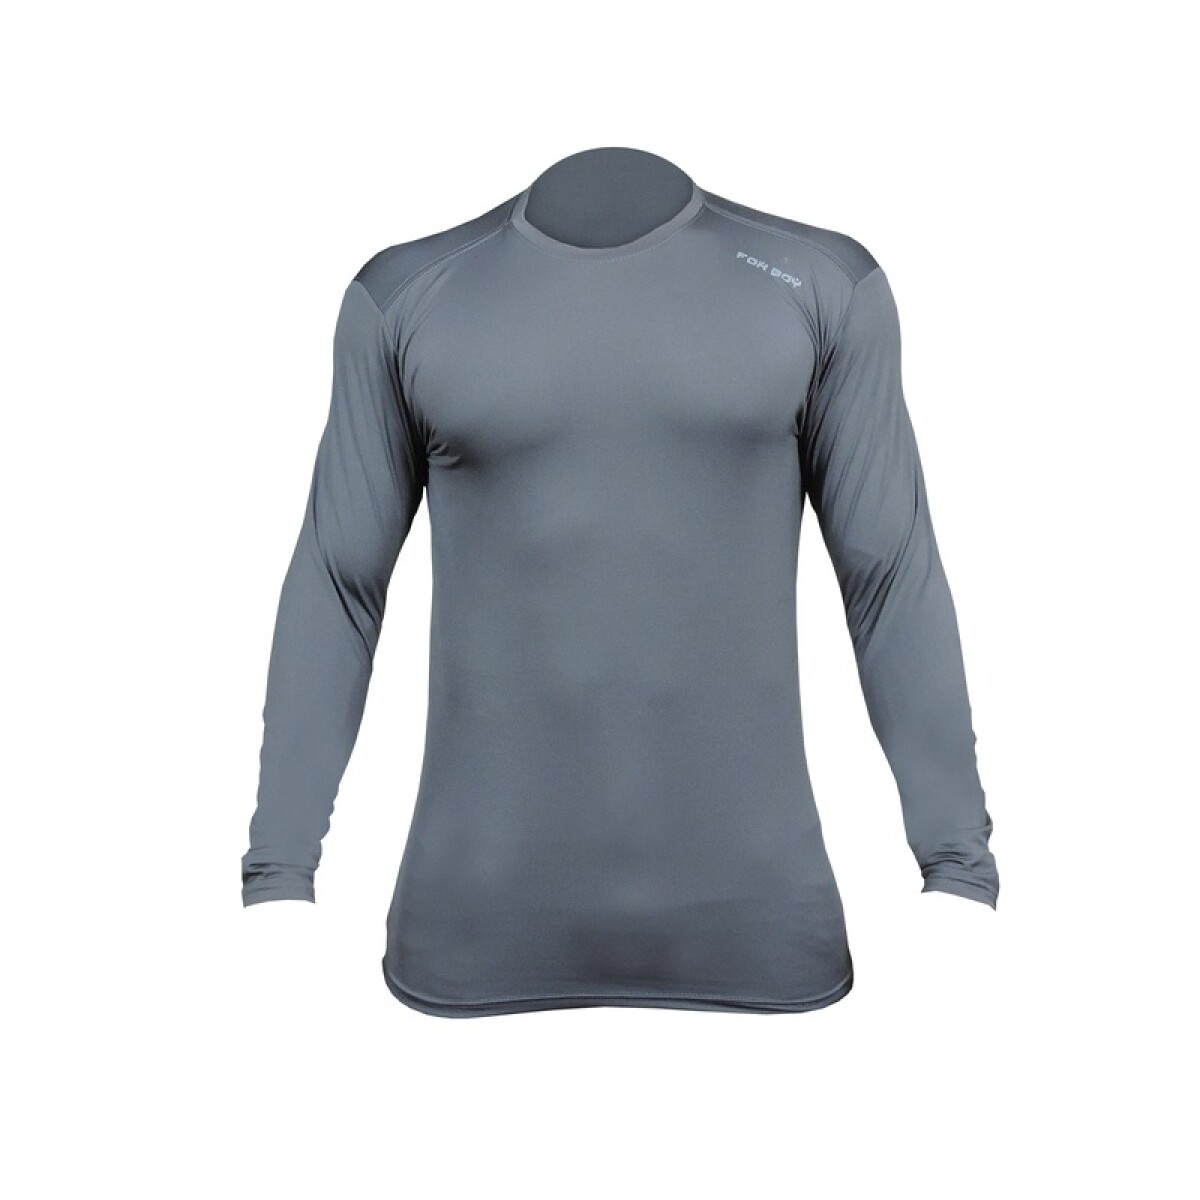 Camiseta térmica con protección UV 50+ - Gris 